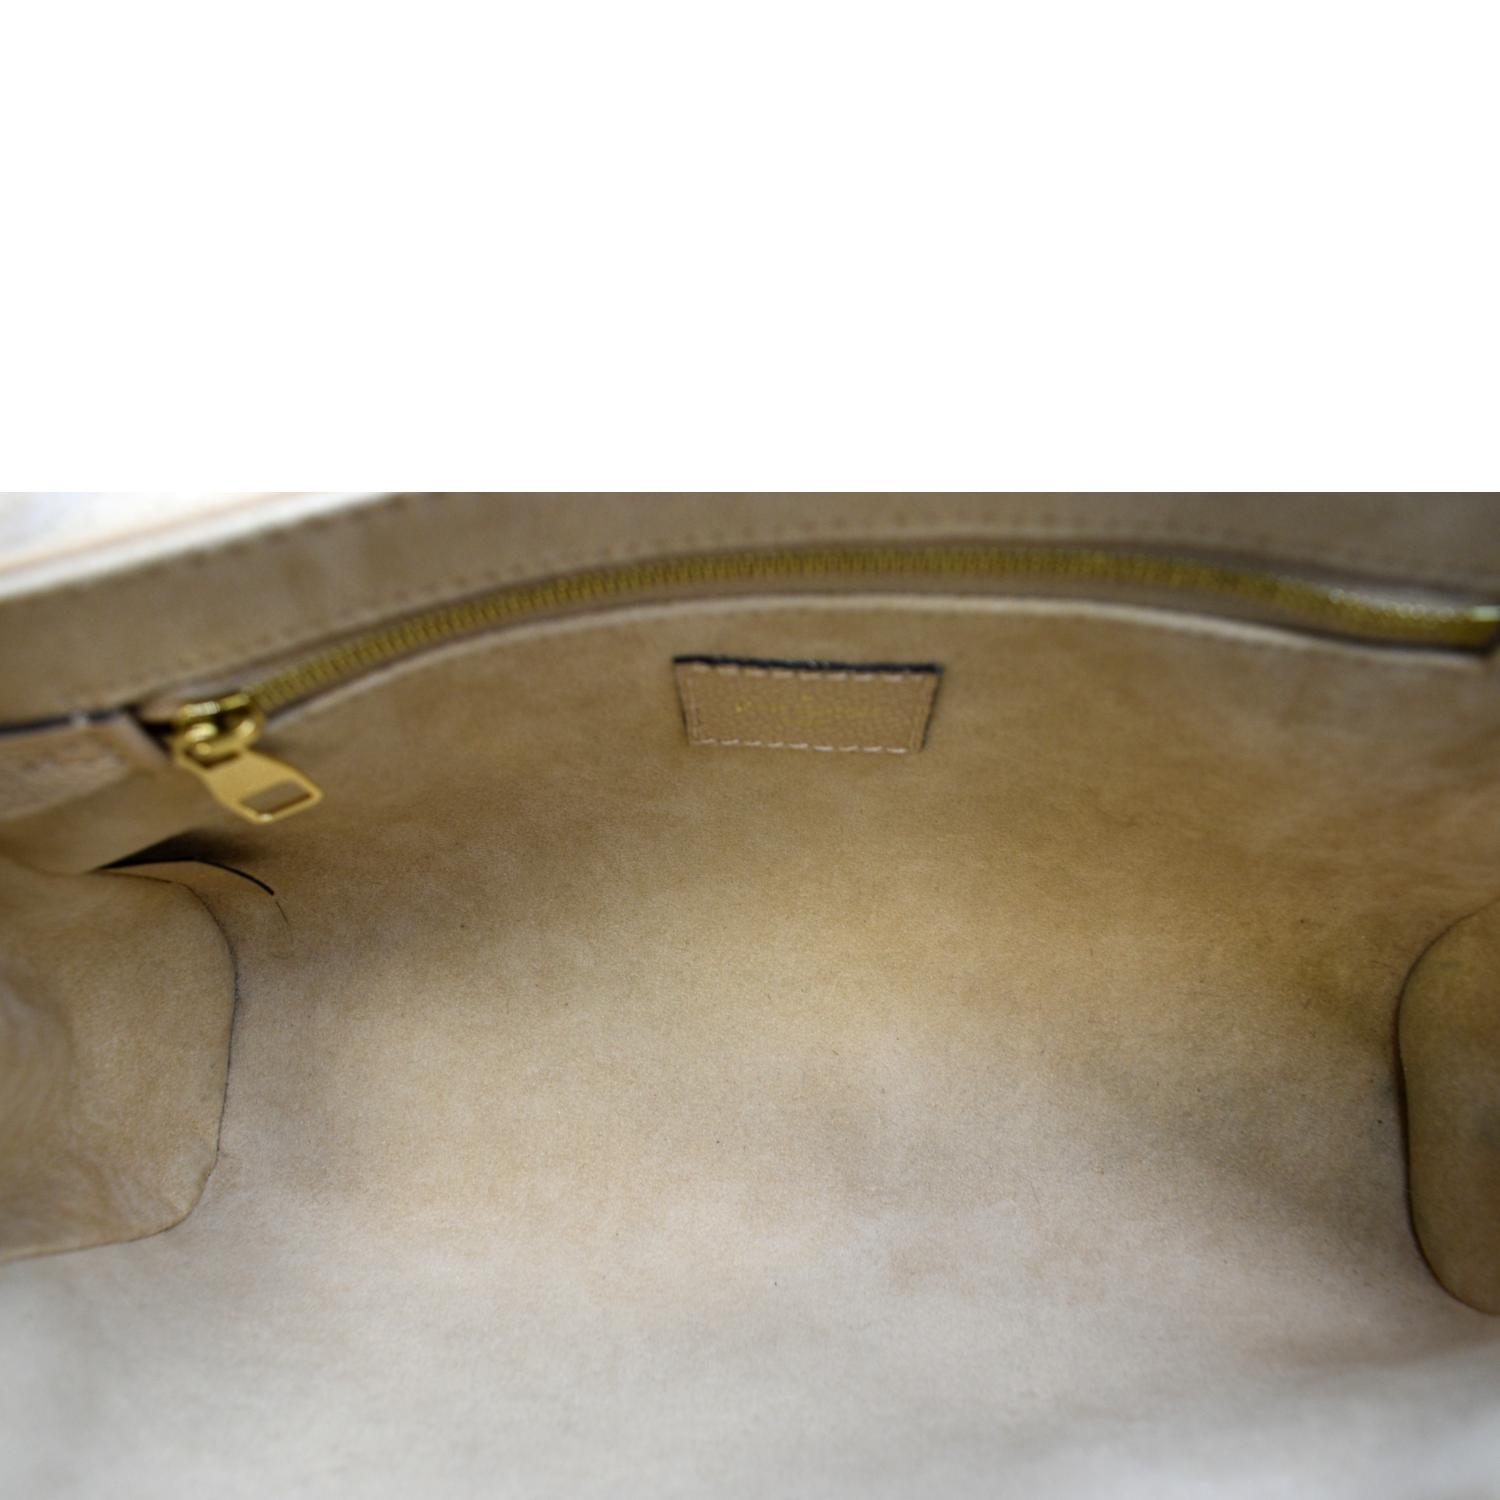 Louis Vuitton St. Germain bag in dune leather, beige Louis Vuitton